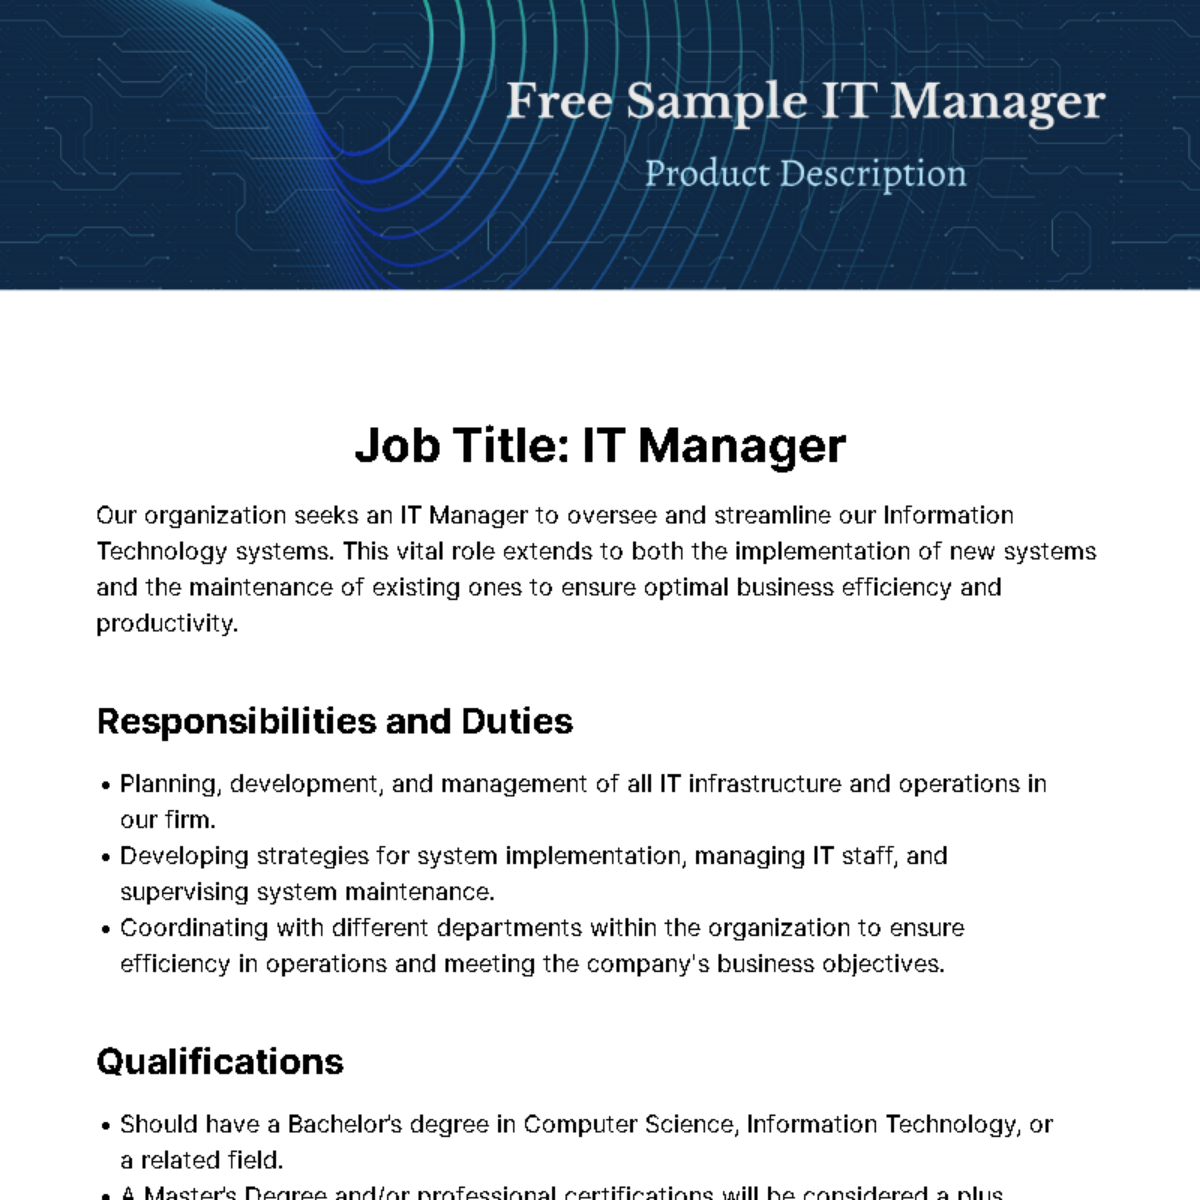 Free Sample IT Manager Job Description Template